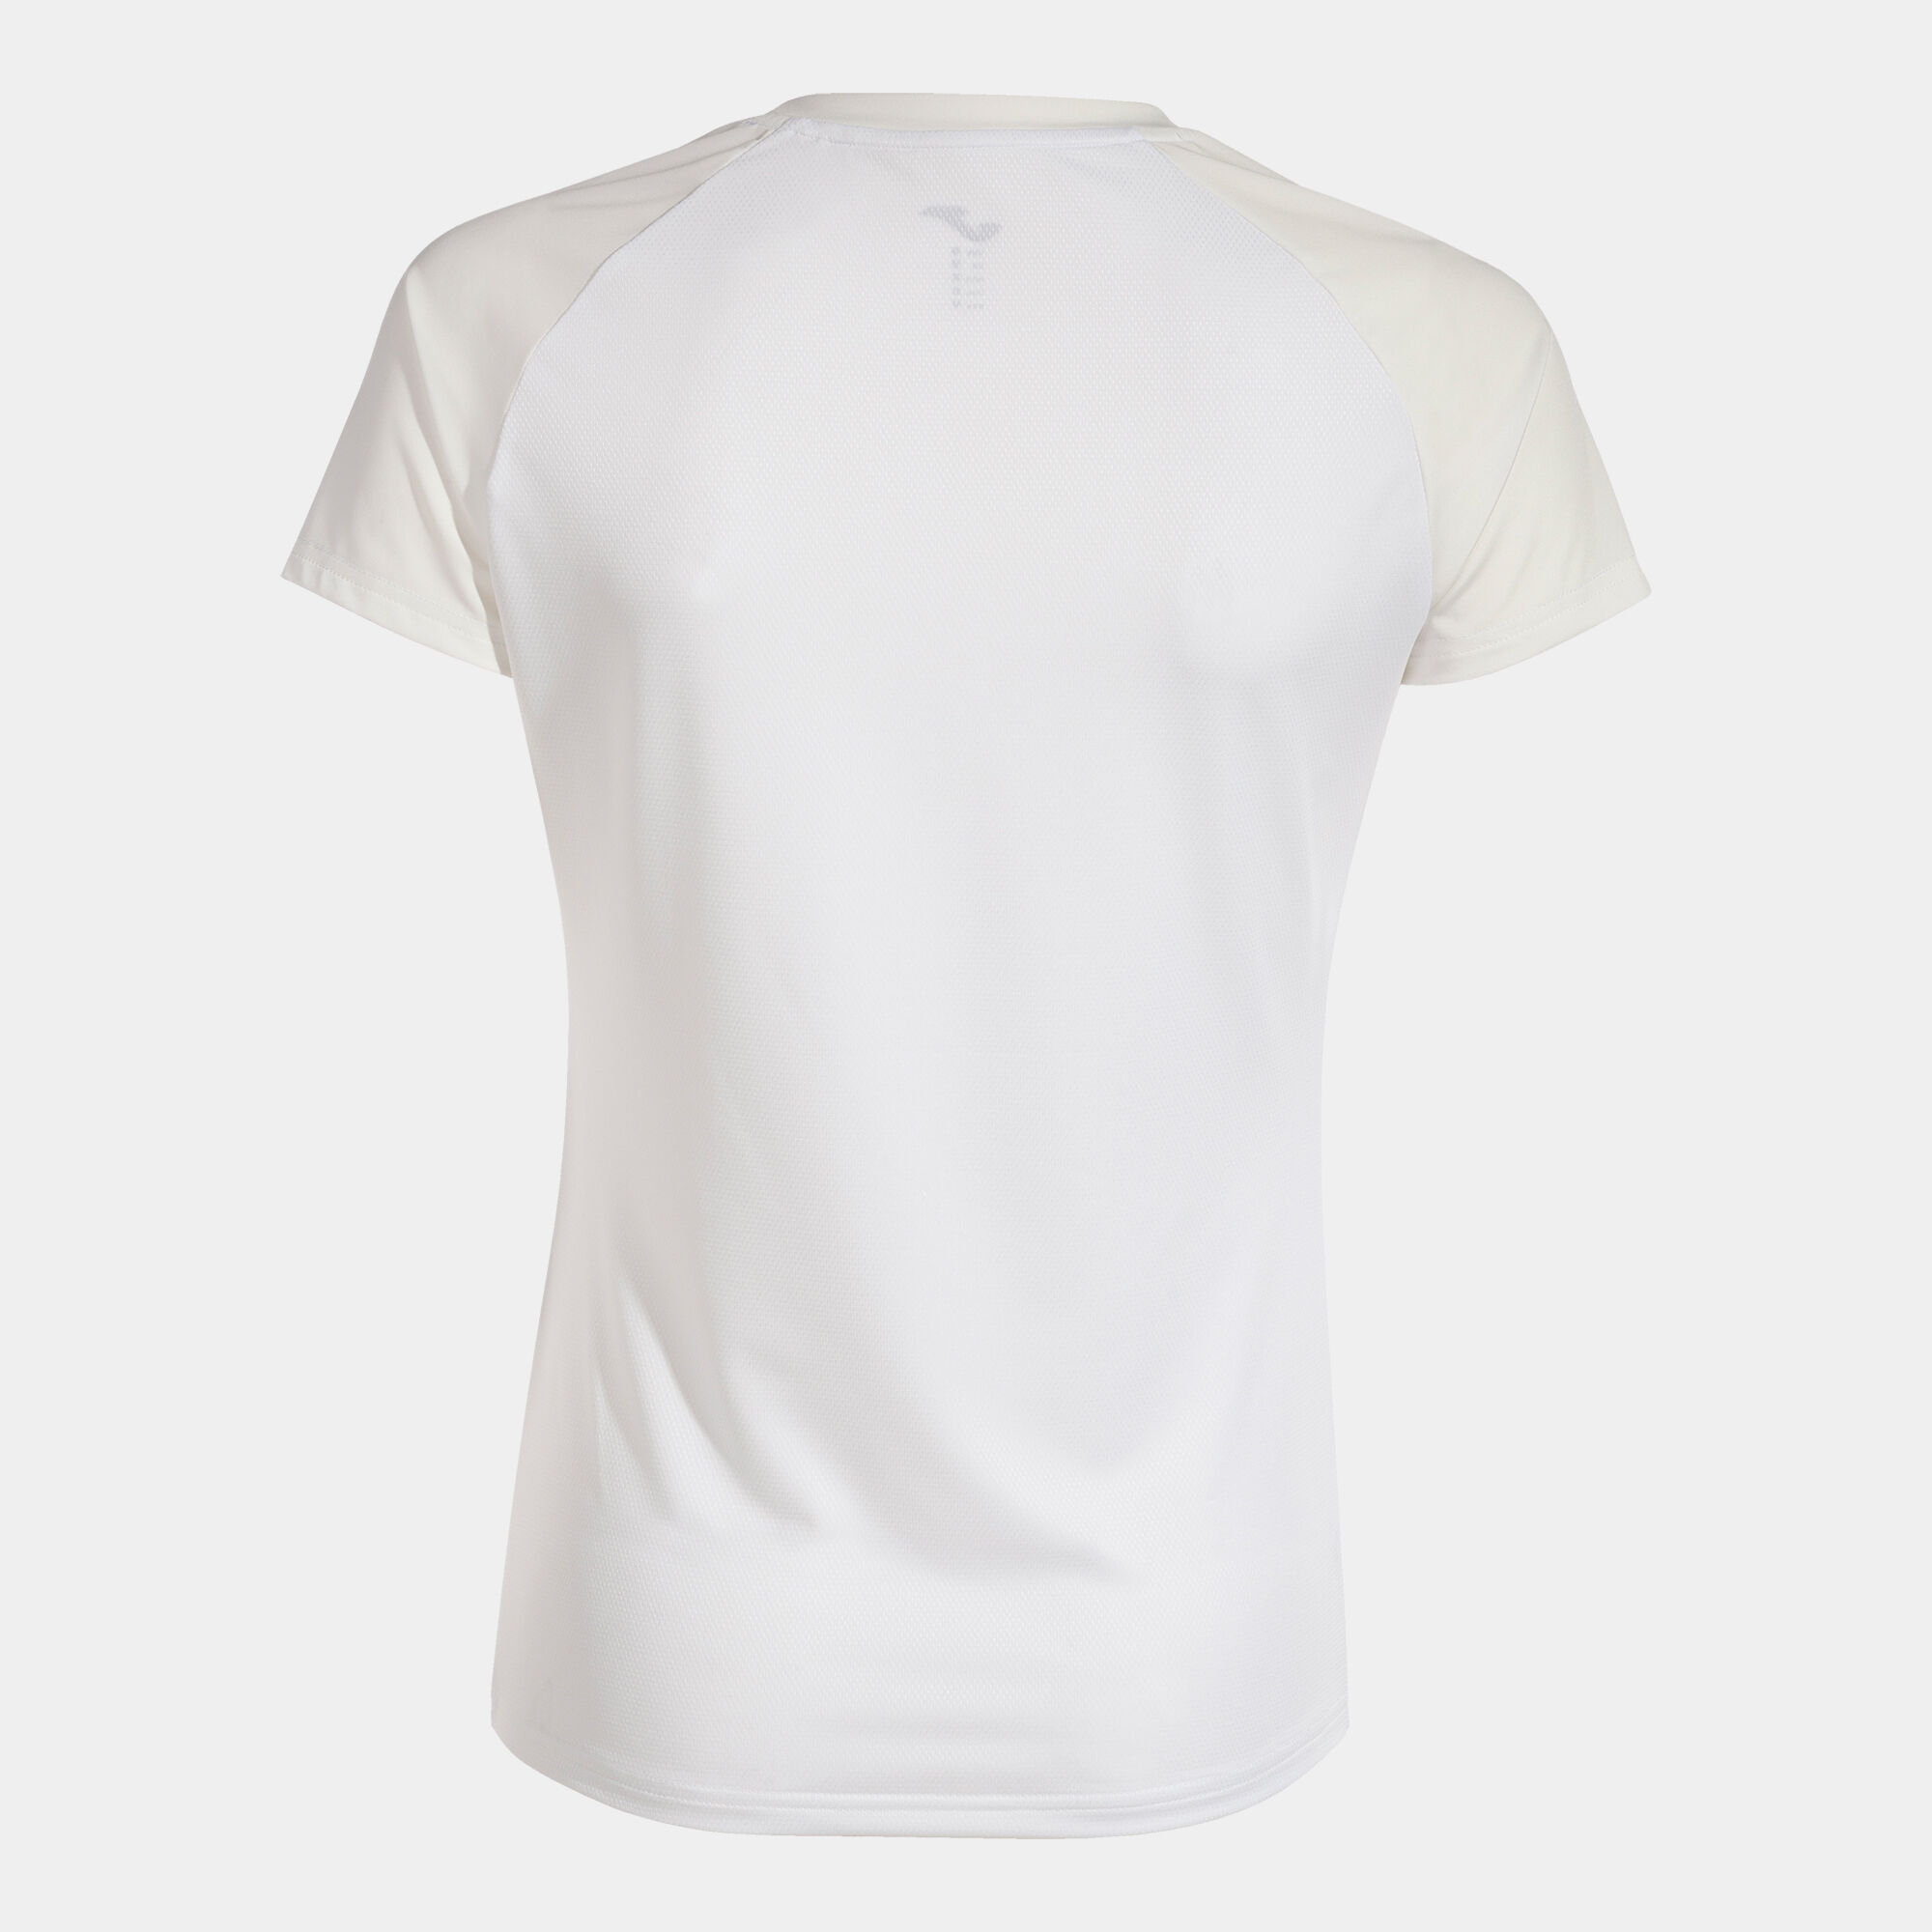 Shirt short sleeve woman Elite X white